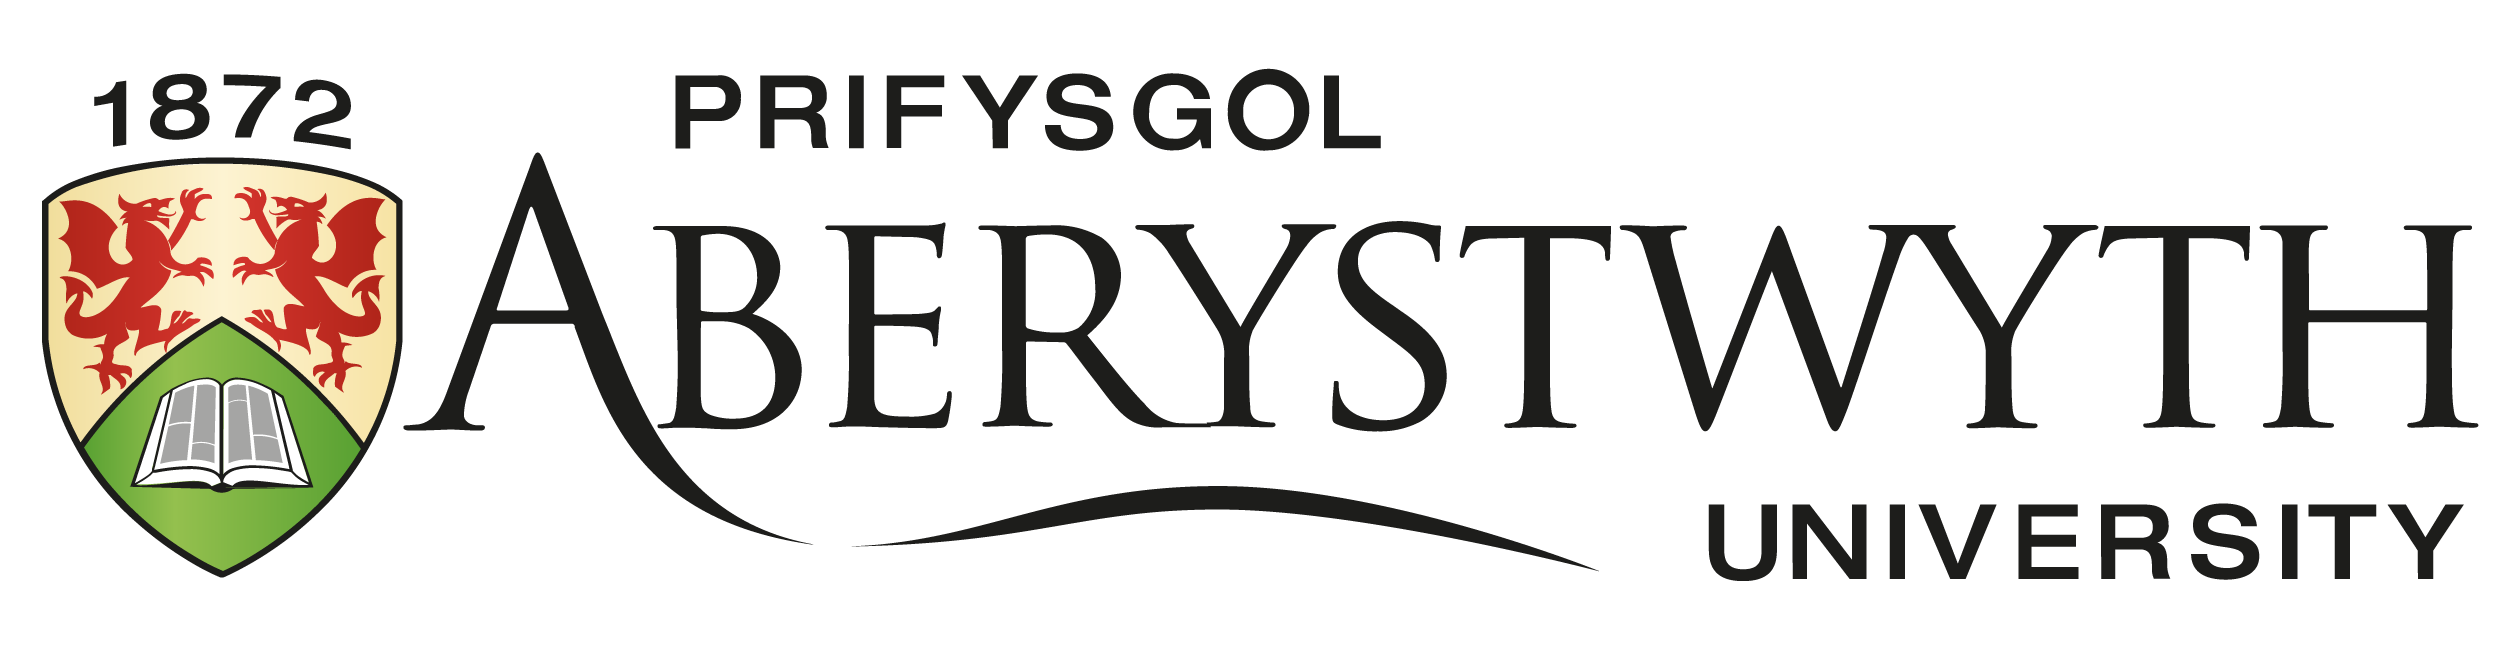 Aberystwyth University company logo